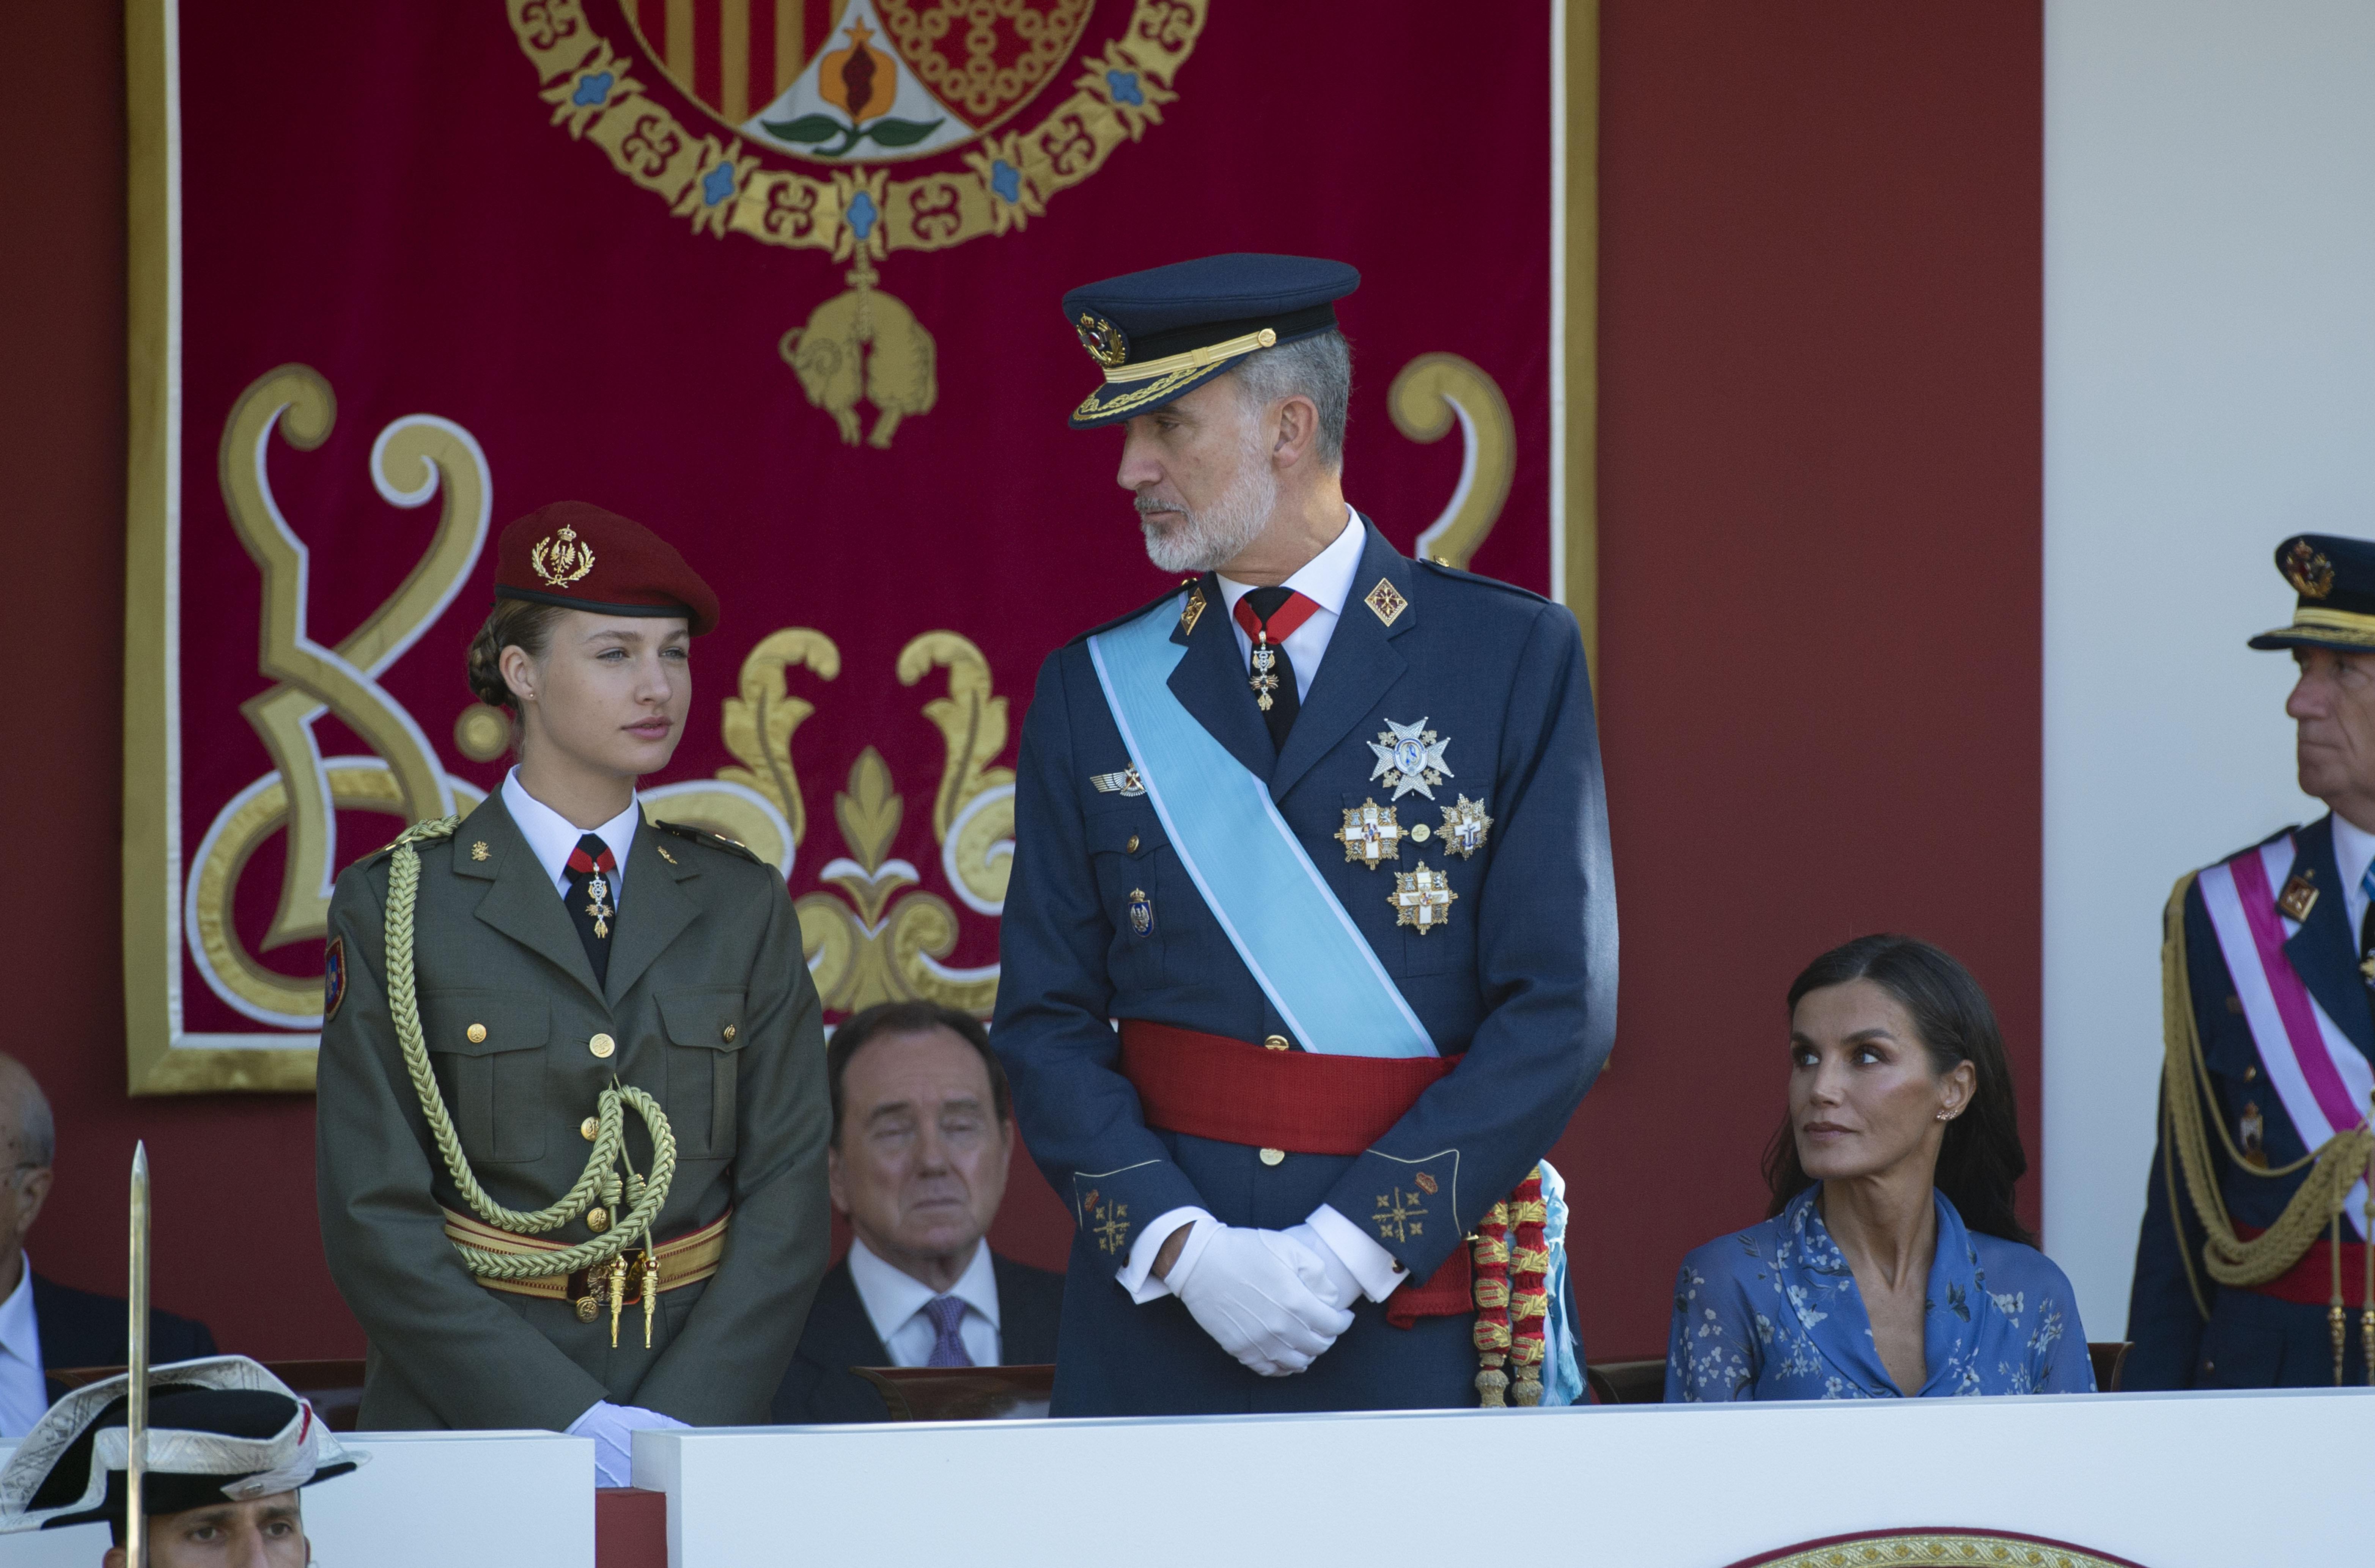 Els catalans suspenen la monarquia espanyola: no supera el 2 sobre 10 des de 2017